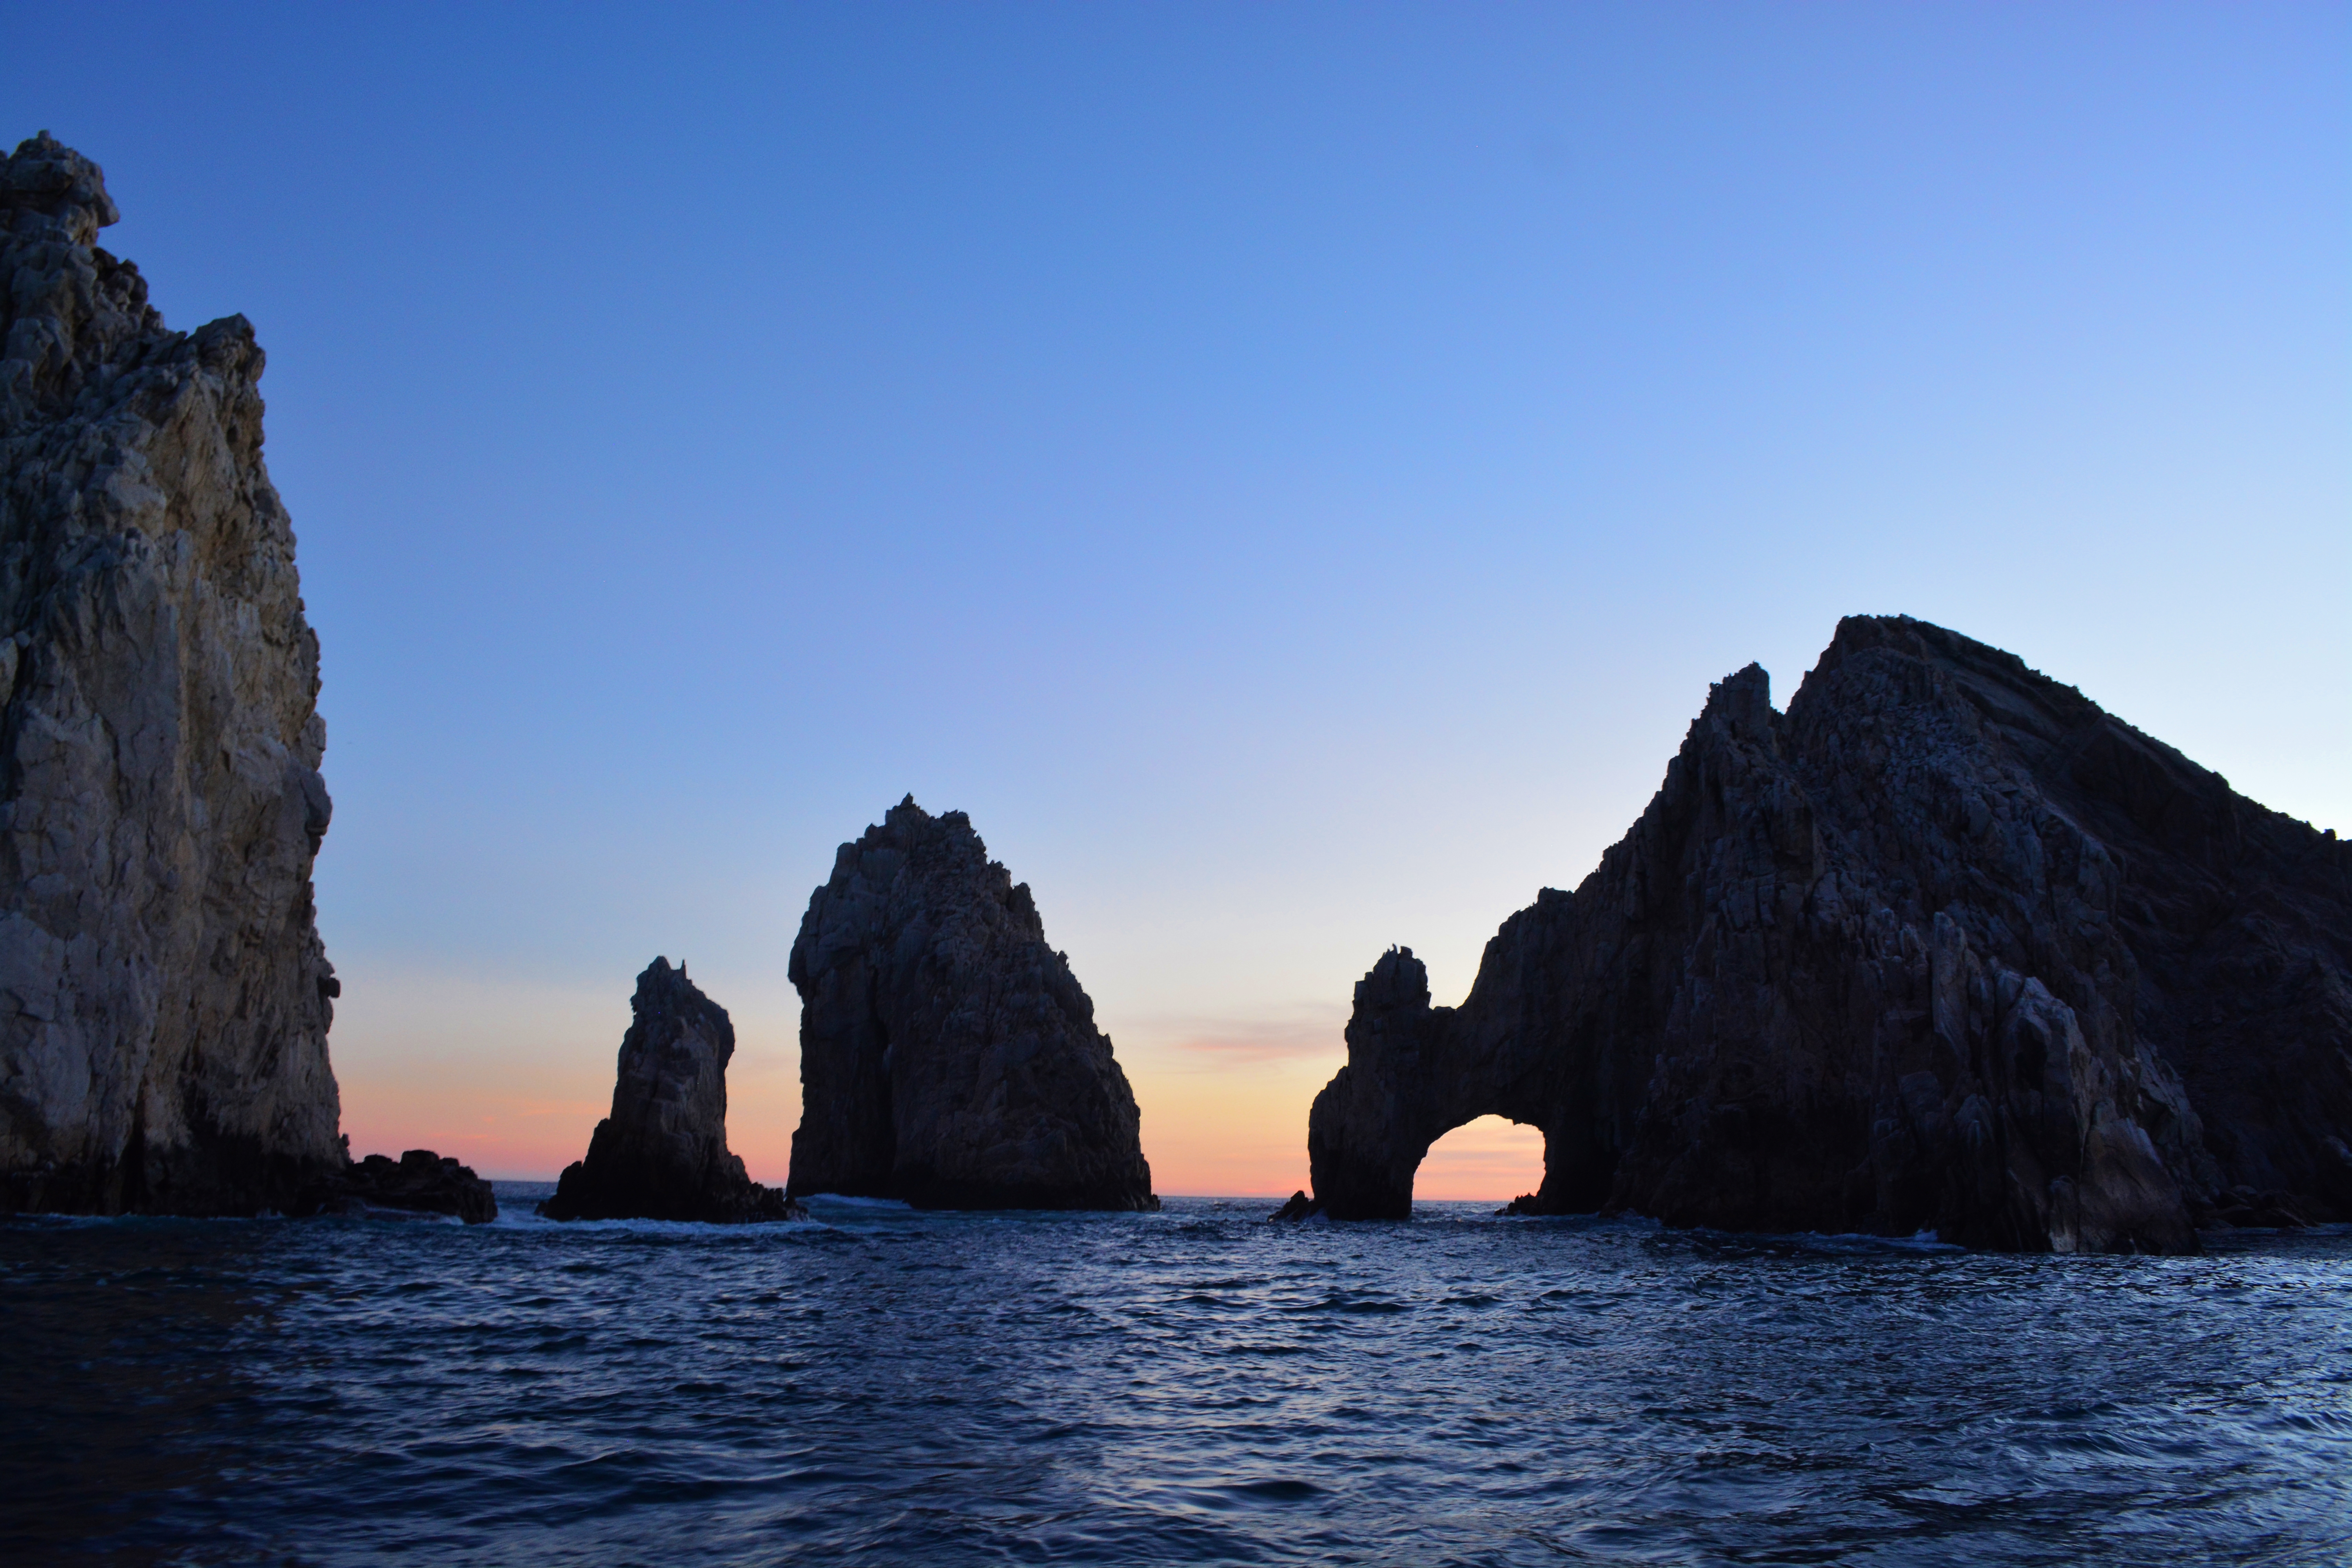 El Arco after Sunset - Cabo San Lucas